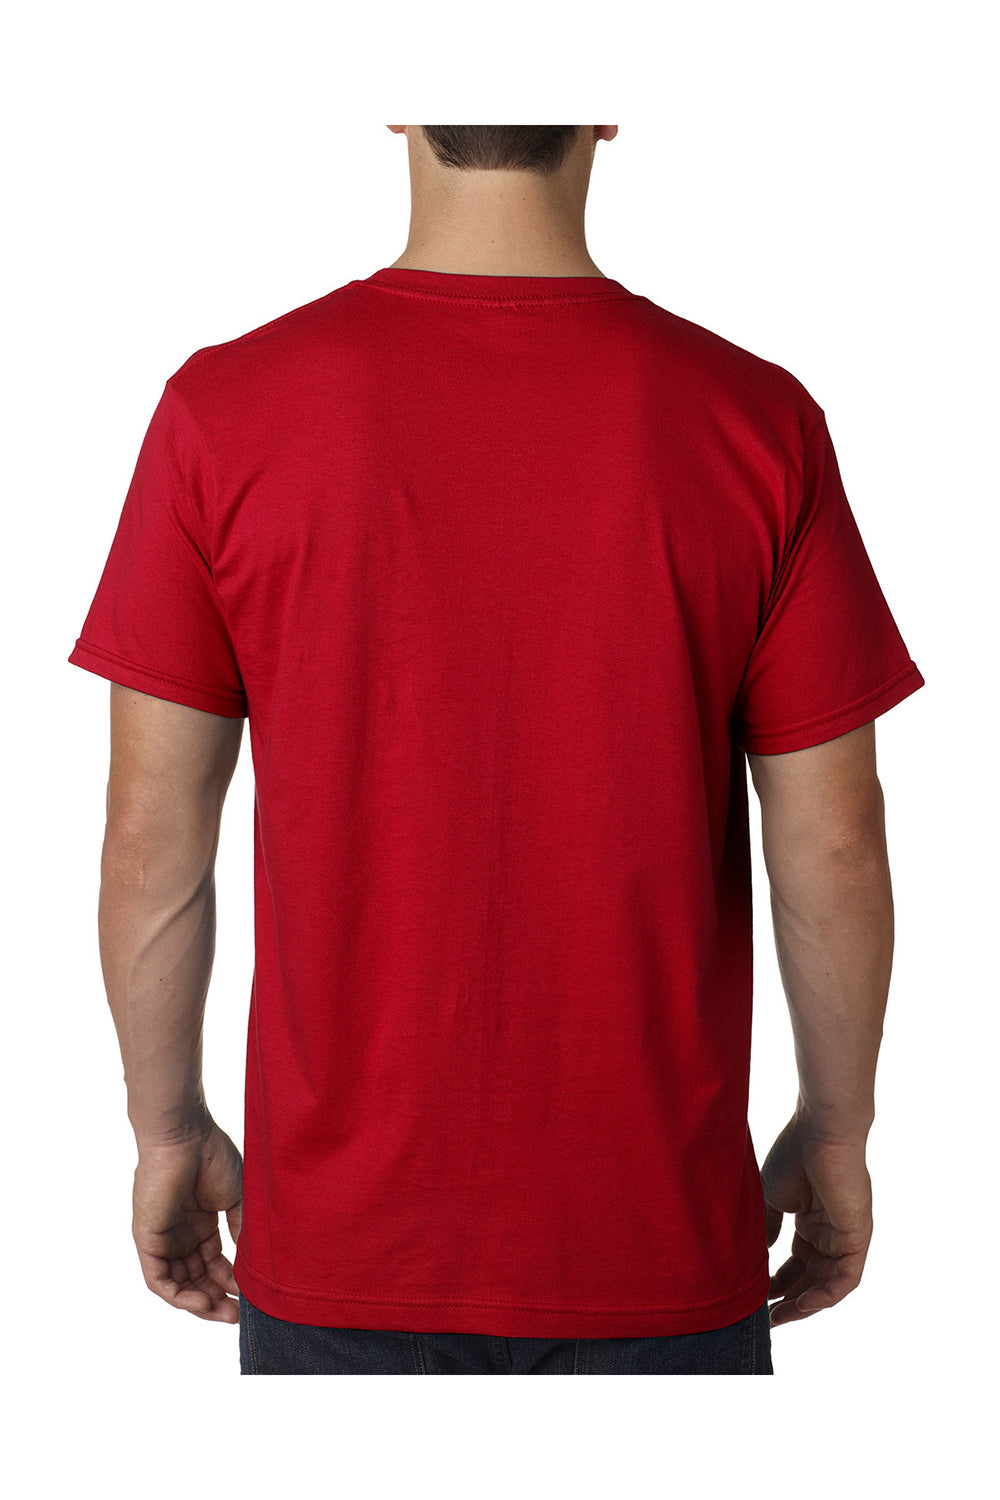 Bayside 5000 Mens USA Made Short Sleeve Crewneck T-Shirt Red Model Back